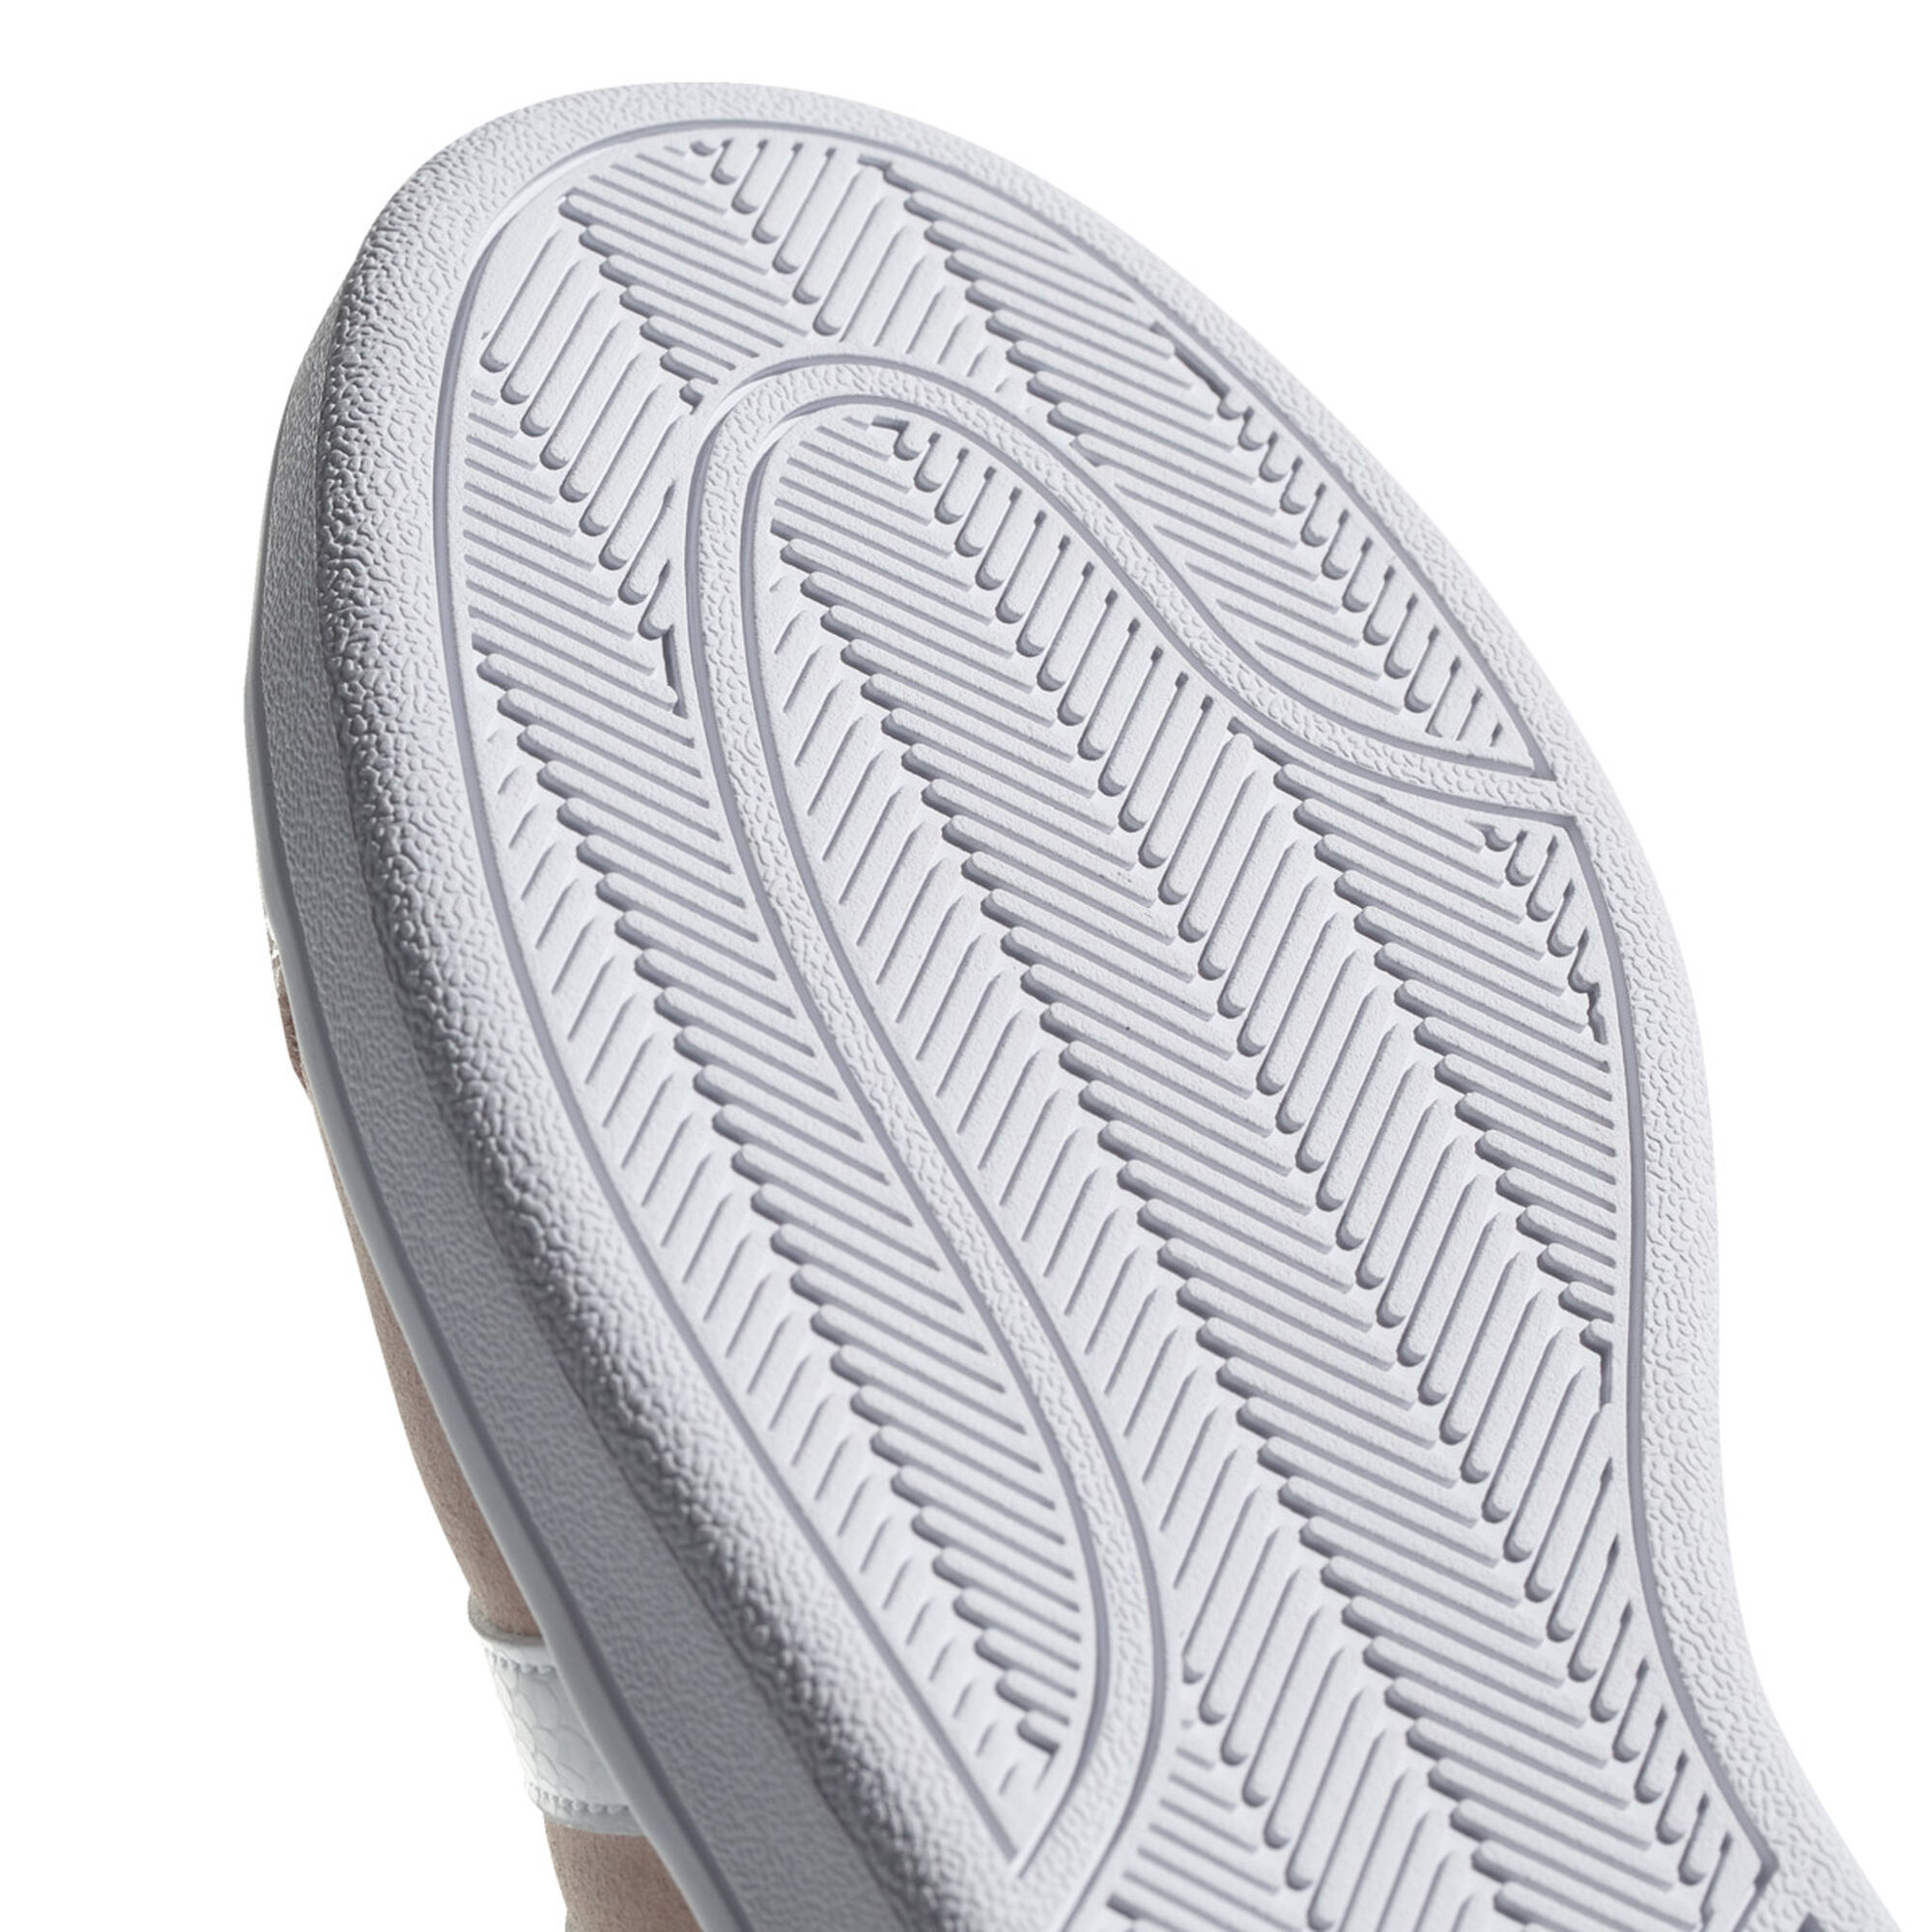 adidas NEO Cloudfoam Sneakers Women - Pink, White online | Tennis-Point